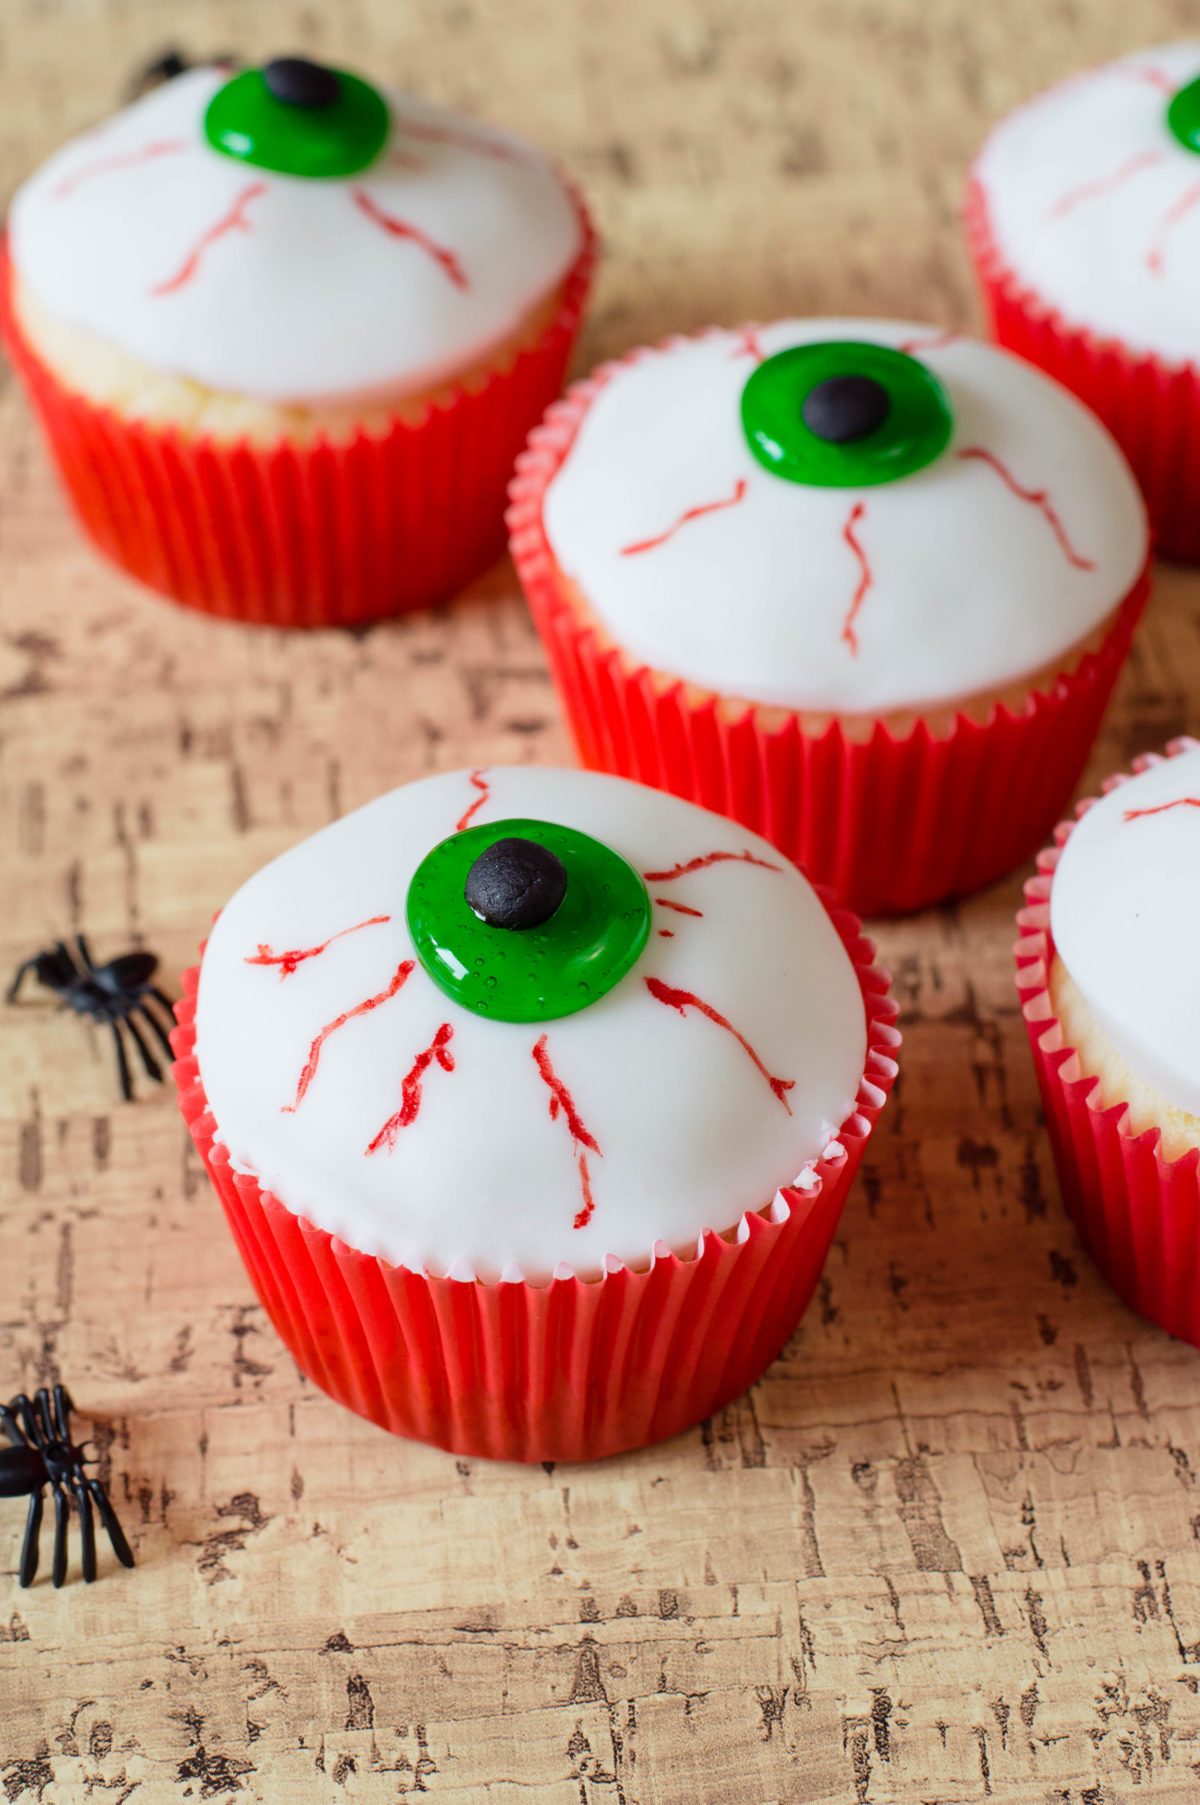 45 Fun & Festive Halloween Cupcake Ideas 13